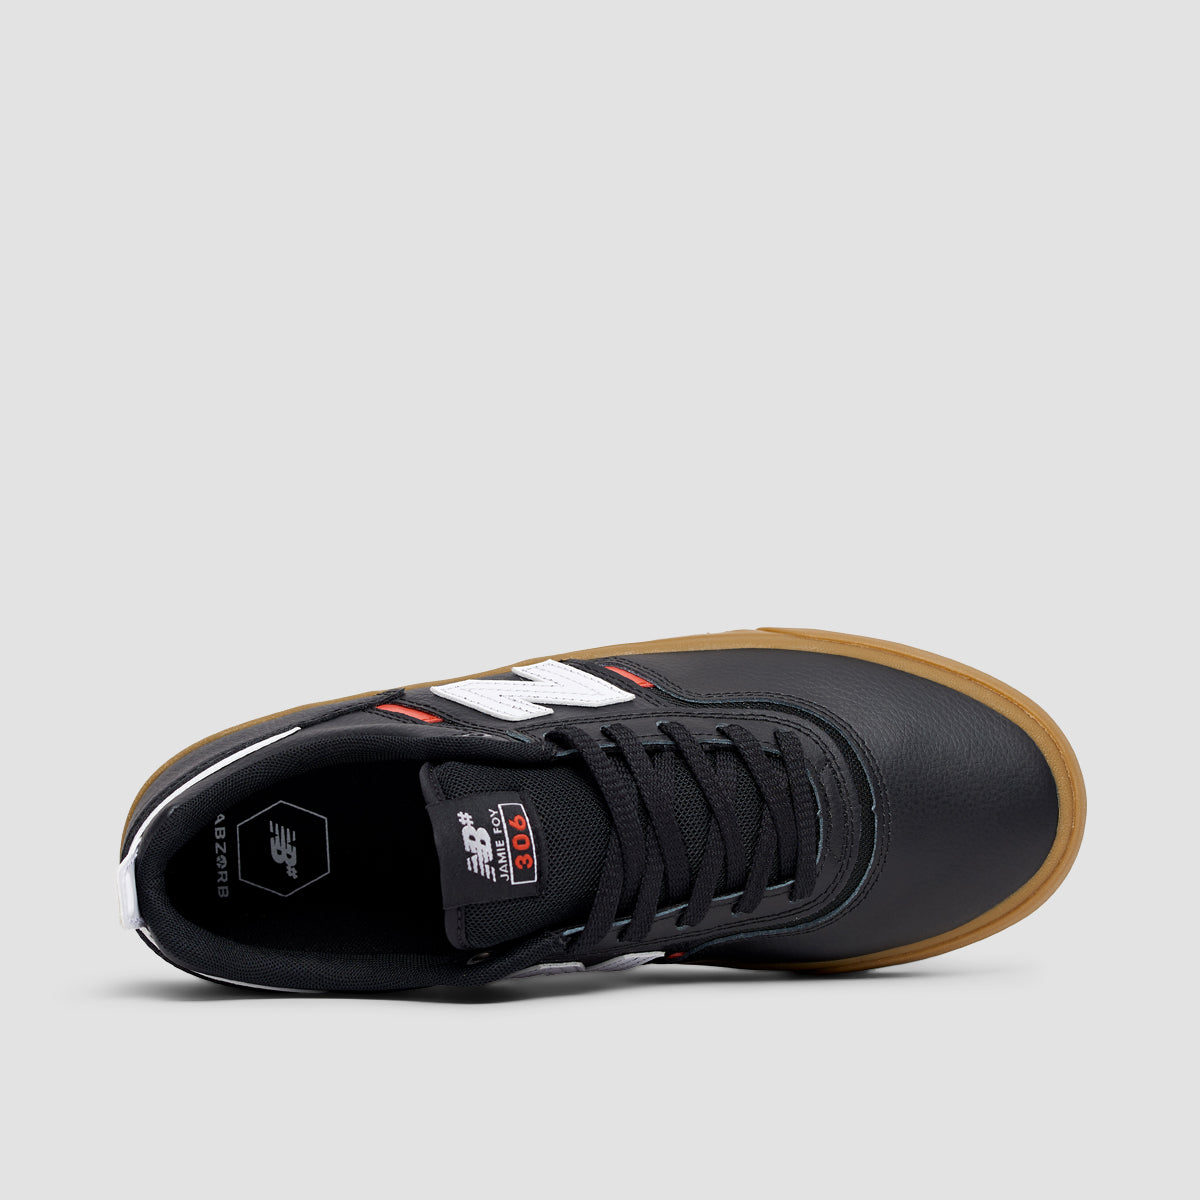 New Balance Numeric Jamie Foy 306 Shoes - Black/Red/Gum